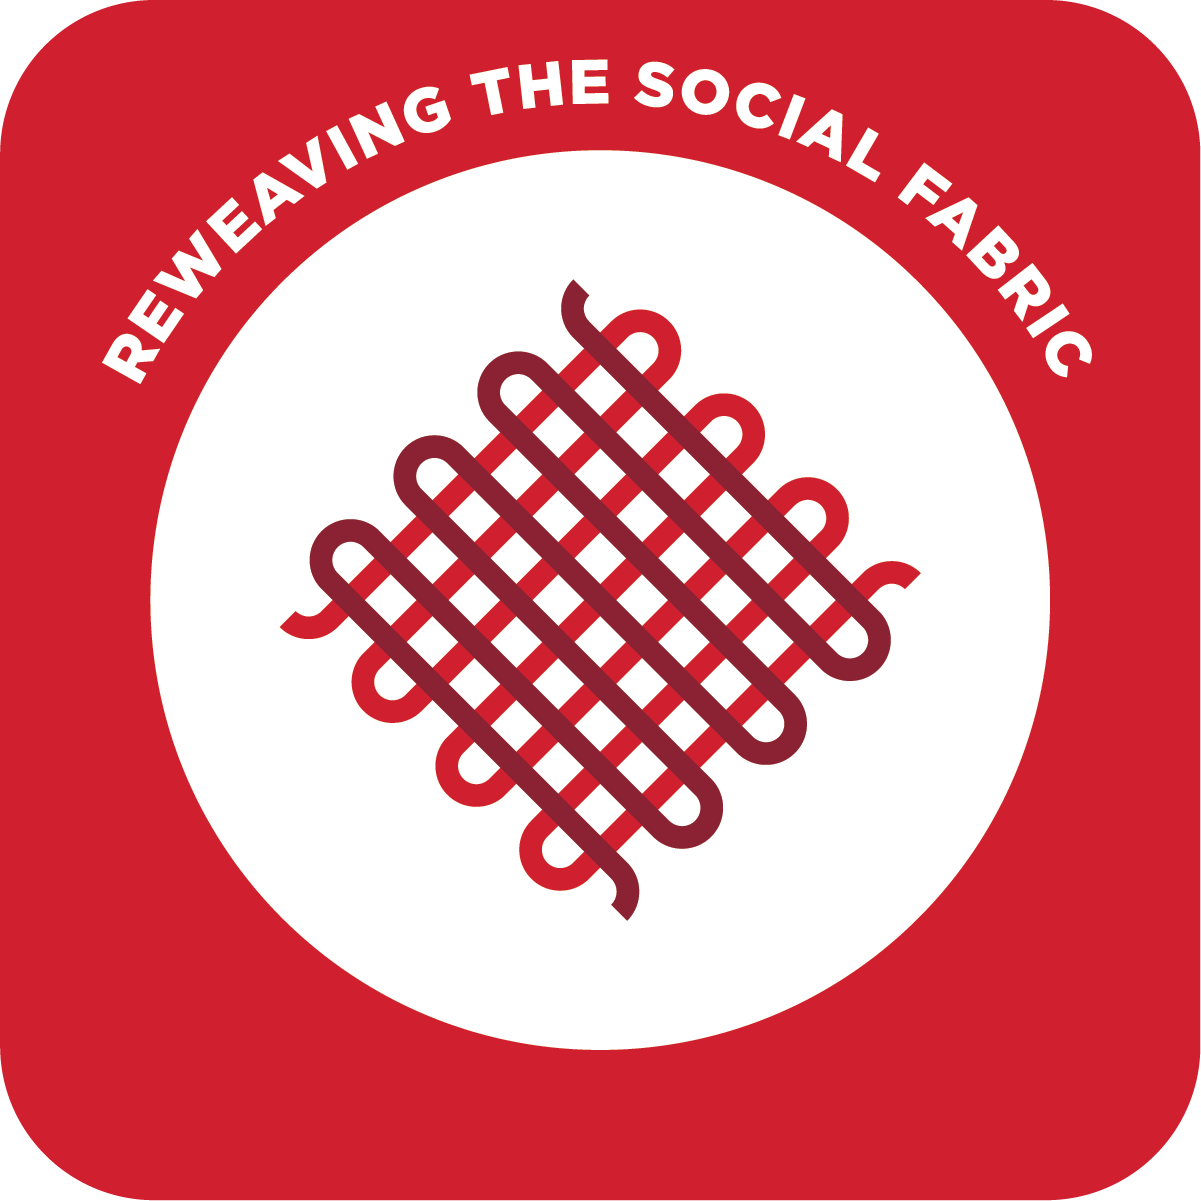 Reweaving the Social Fabric